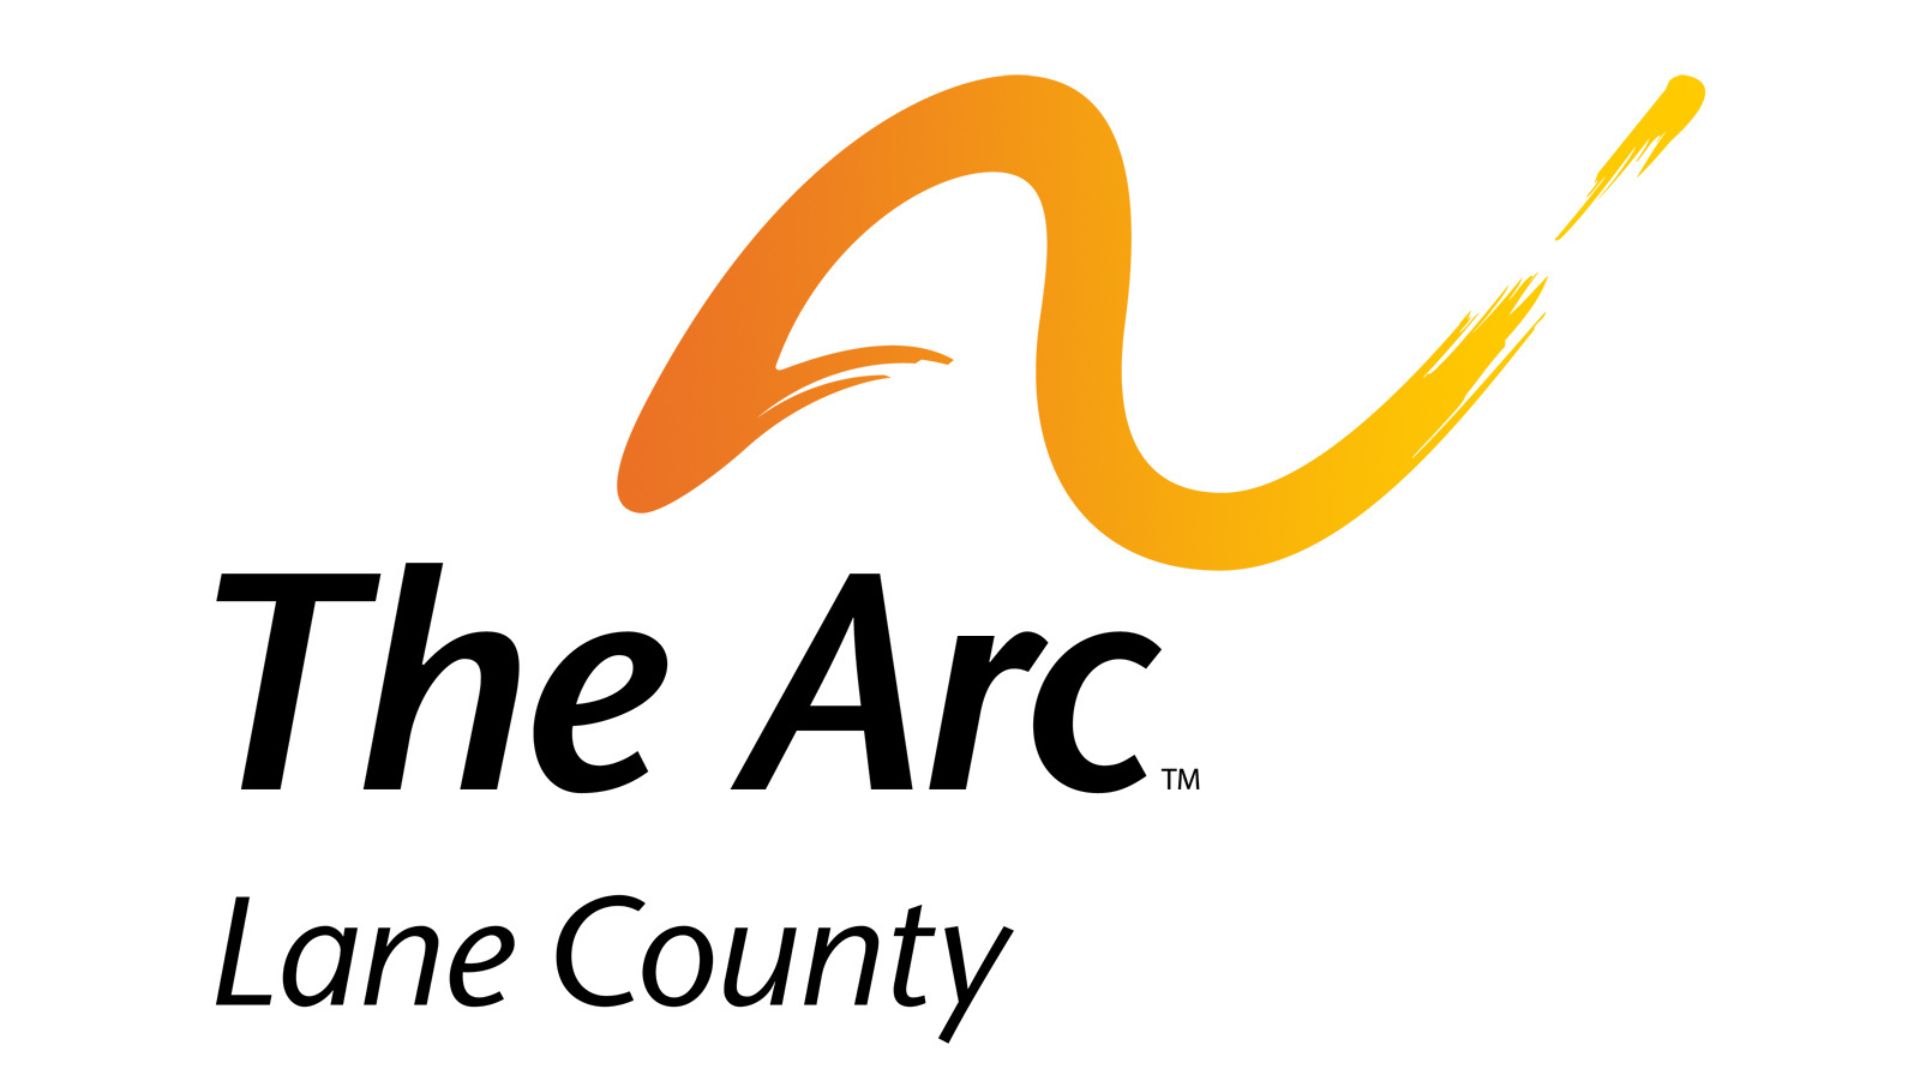 The Arc Lane County logo.